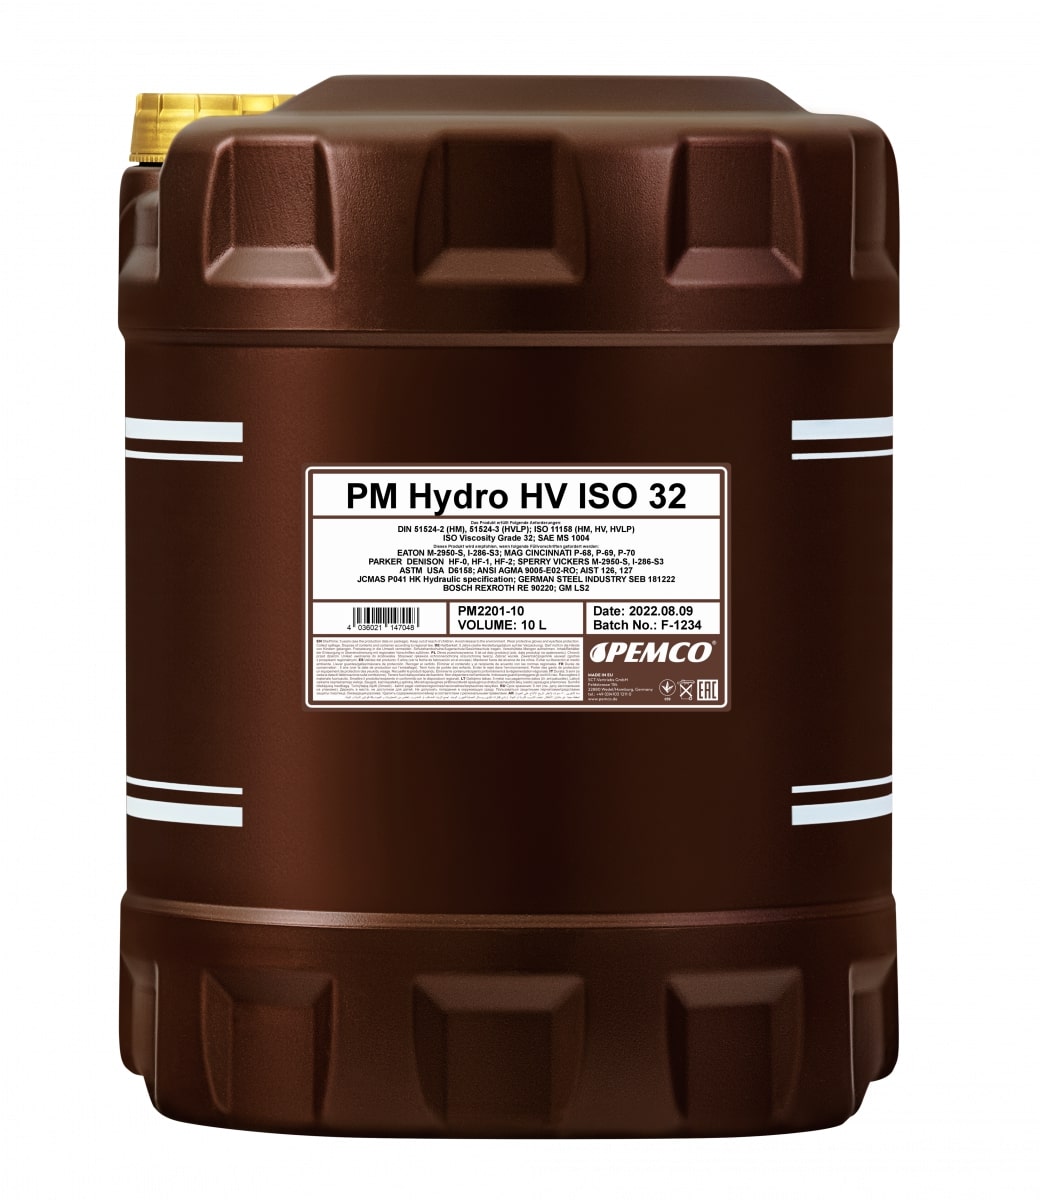  PEMCO Hydro HV ISO 32